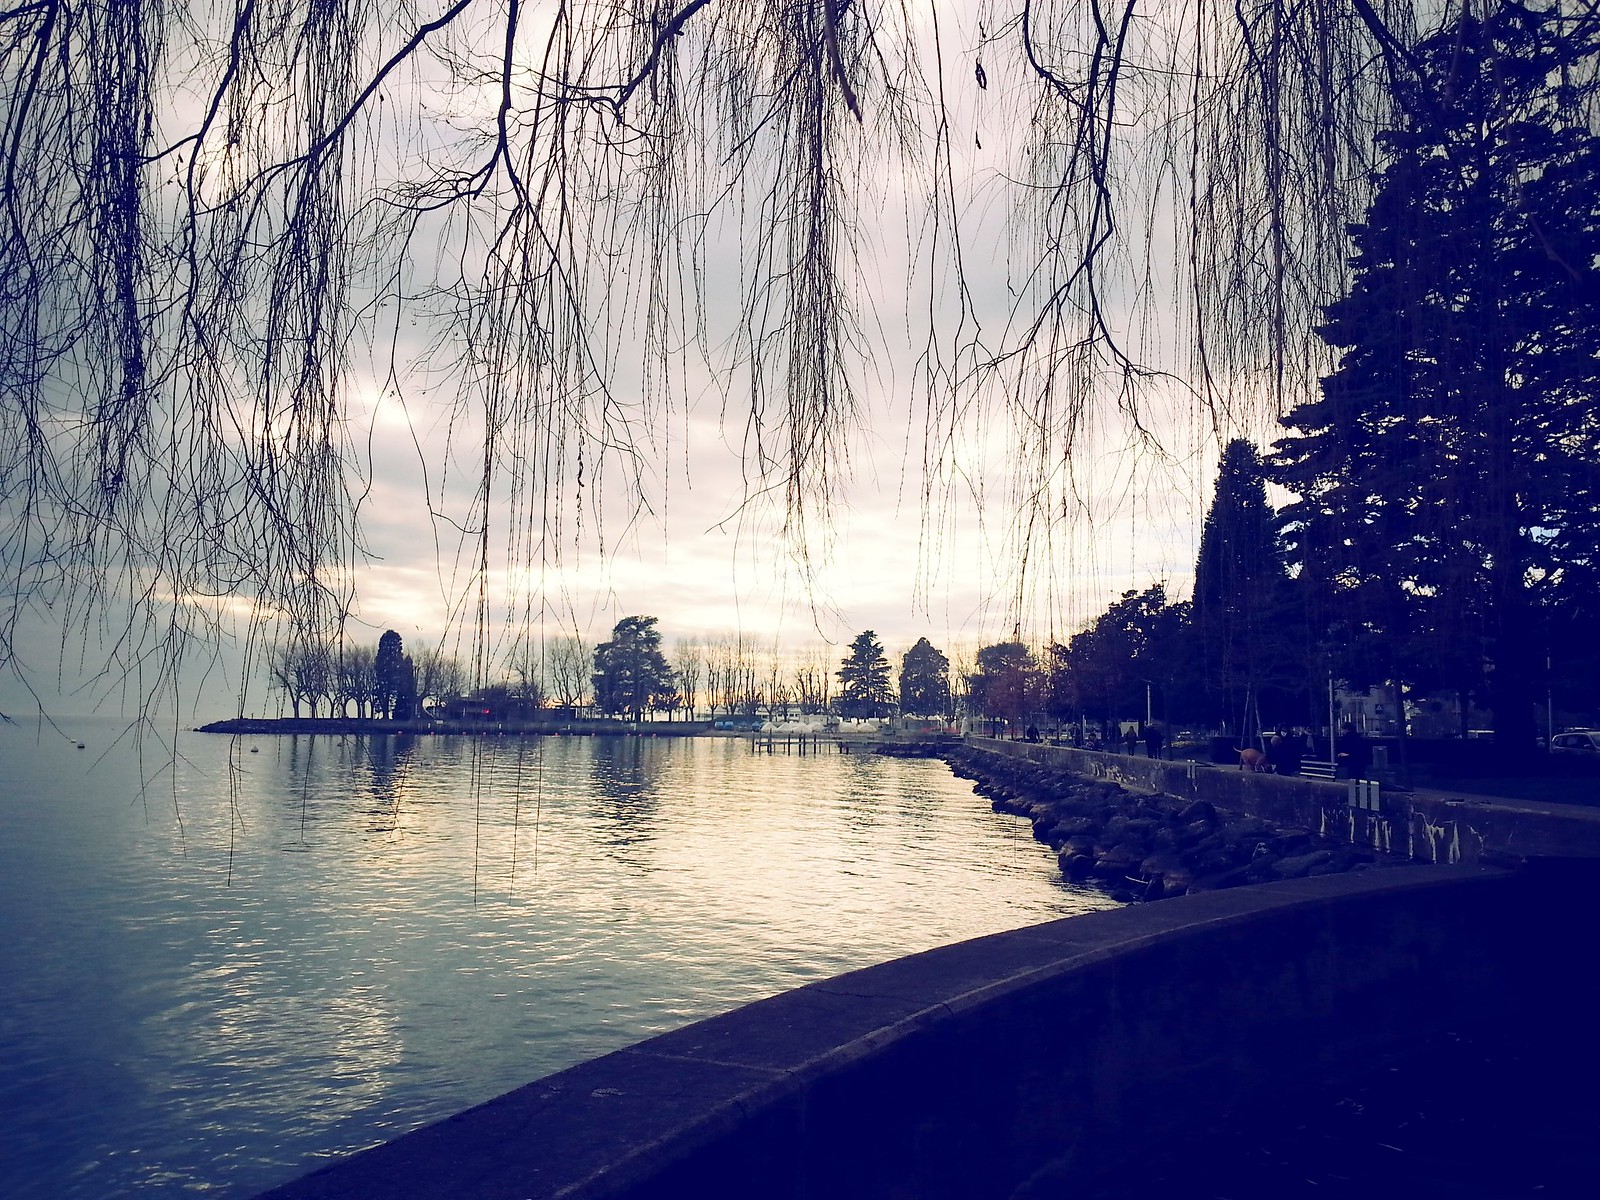 16-01-29 (Lausanne) On Lake Geneva.